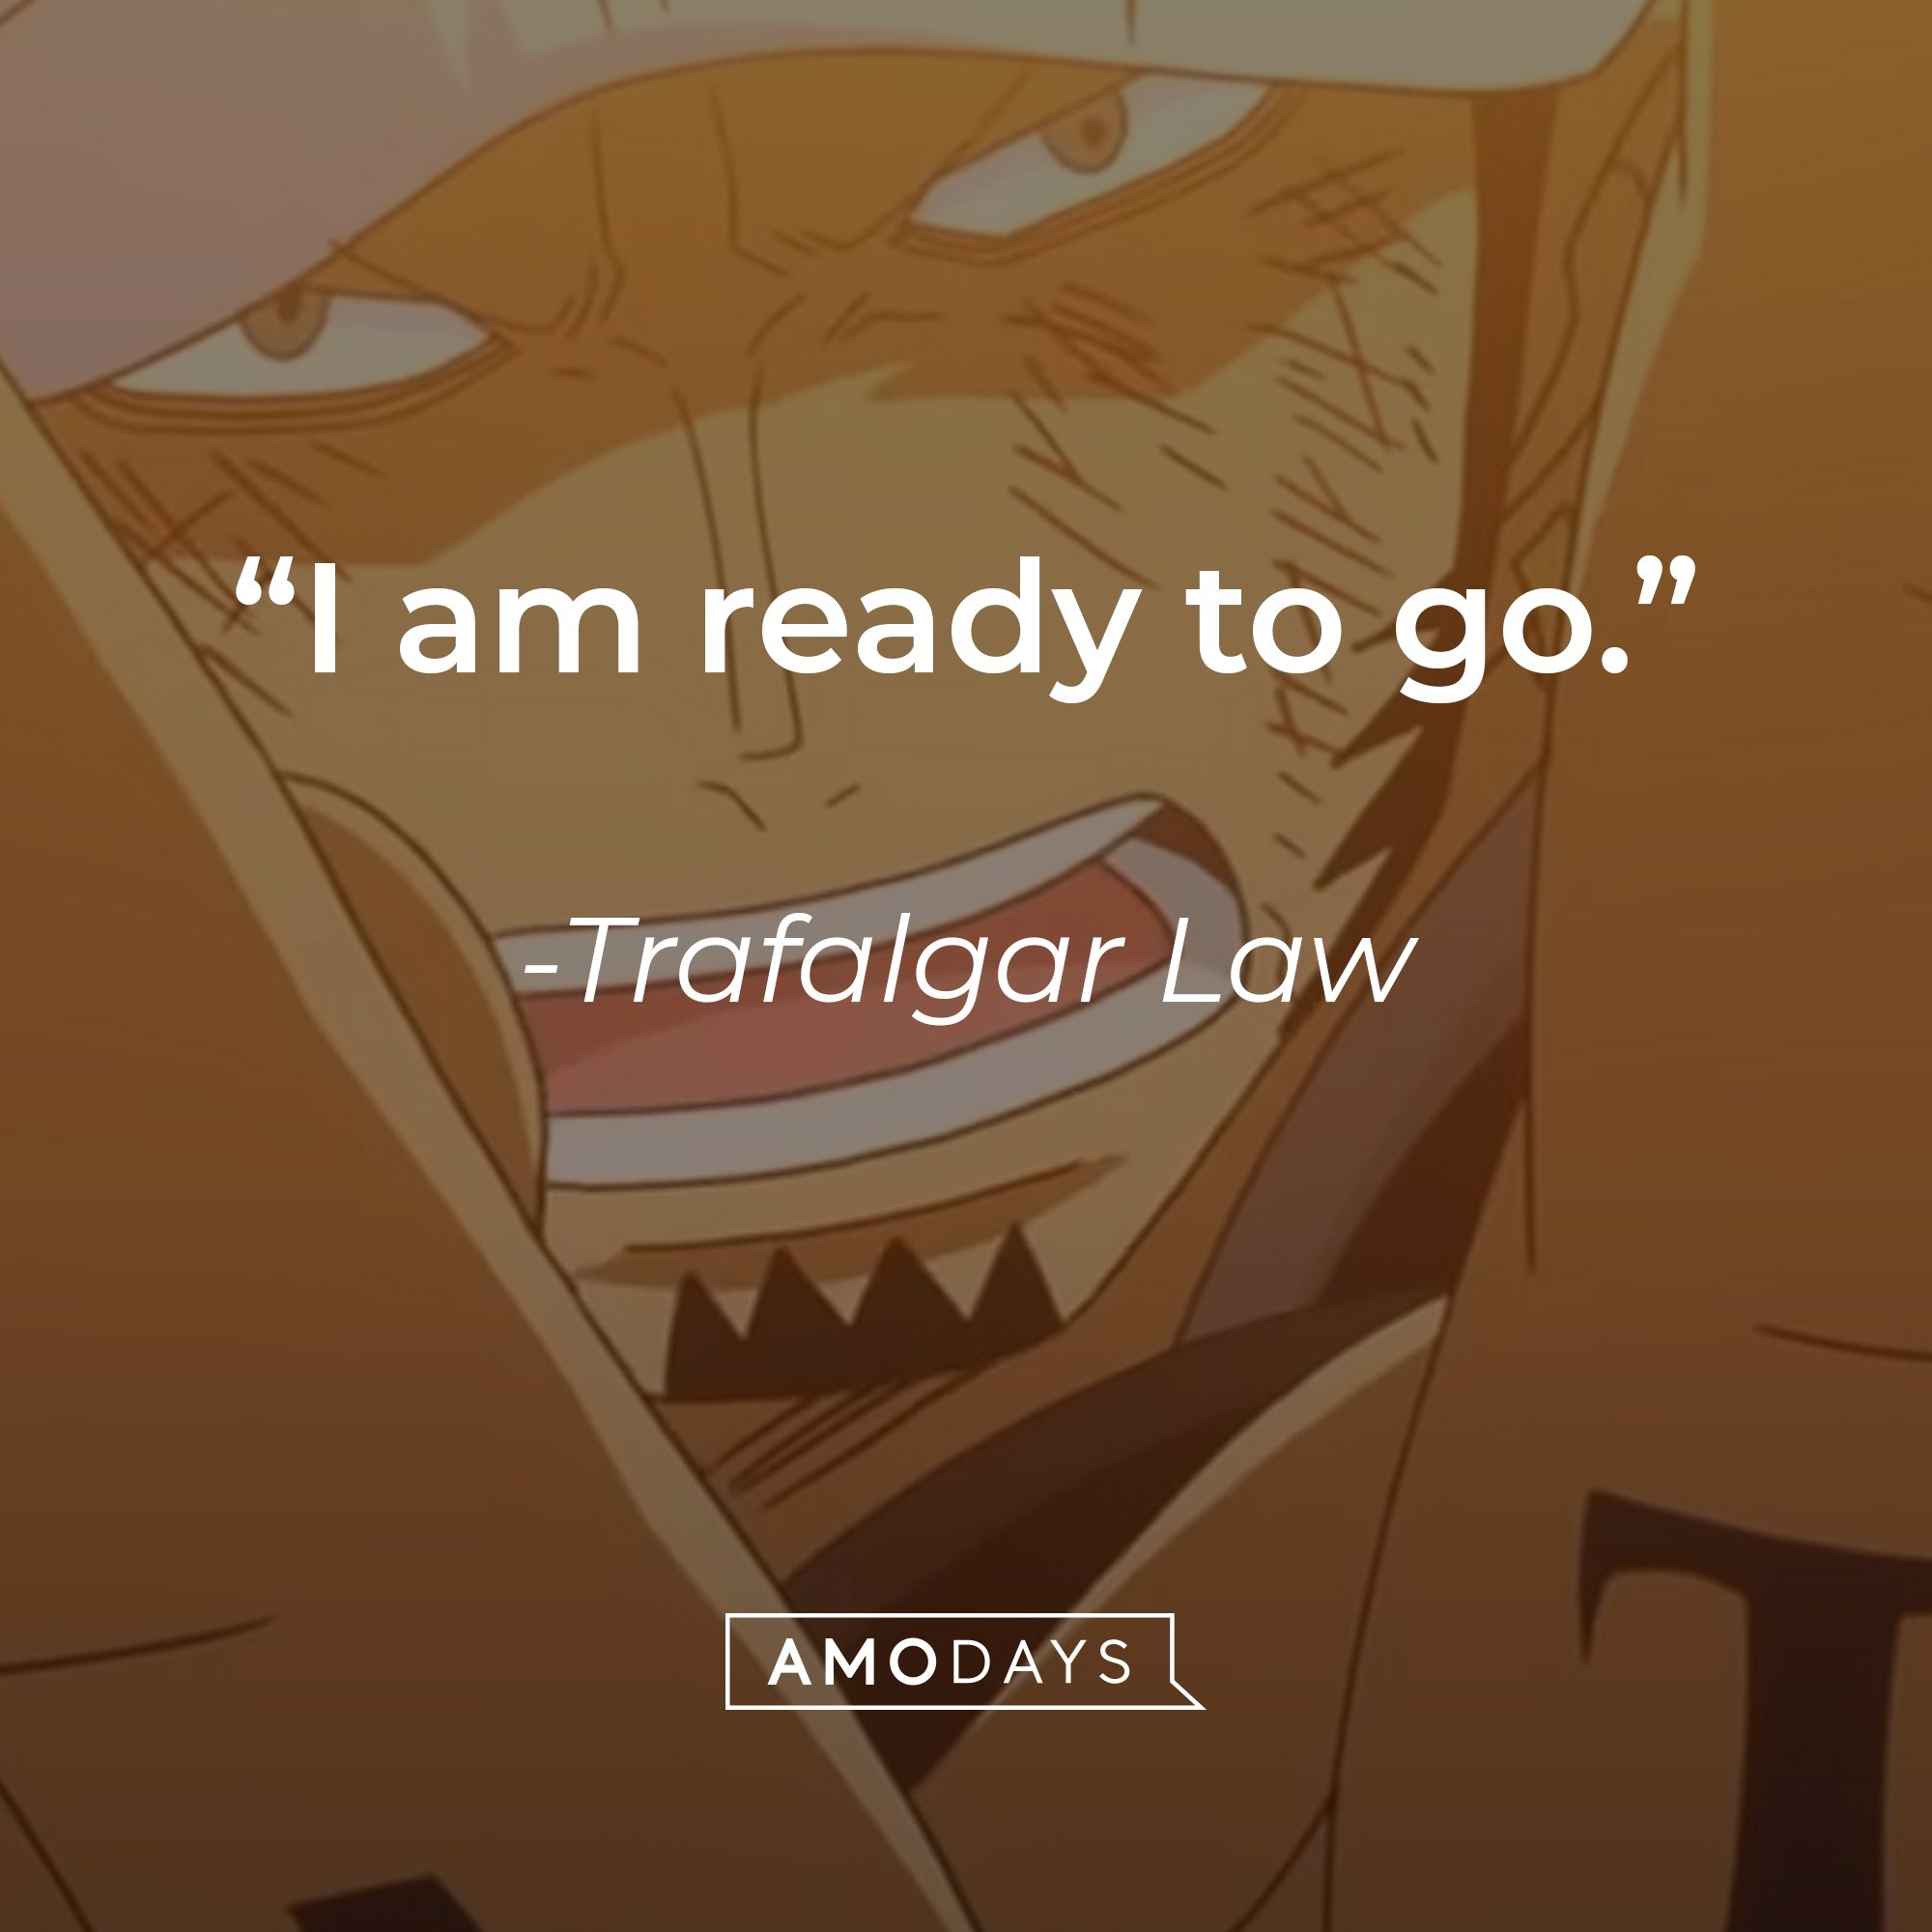 Trafalgar Law’s quote: "I am ready to go." | Image: AmoDays